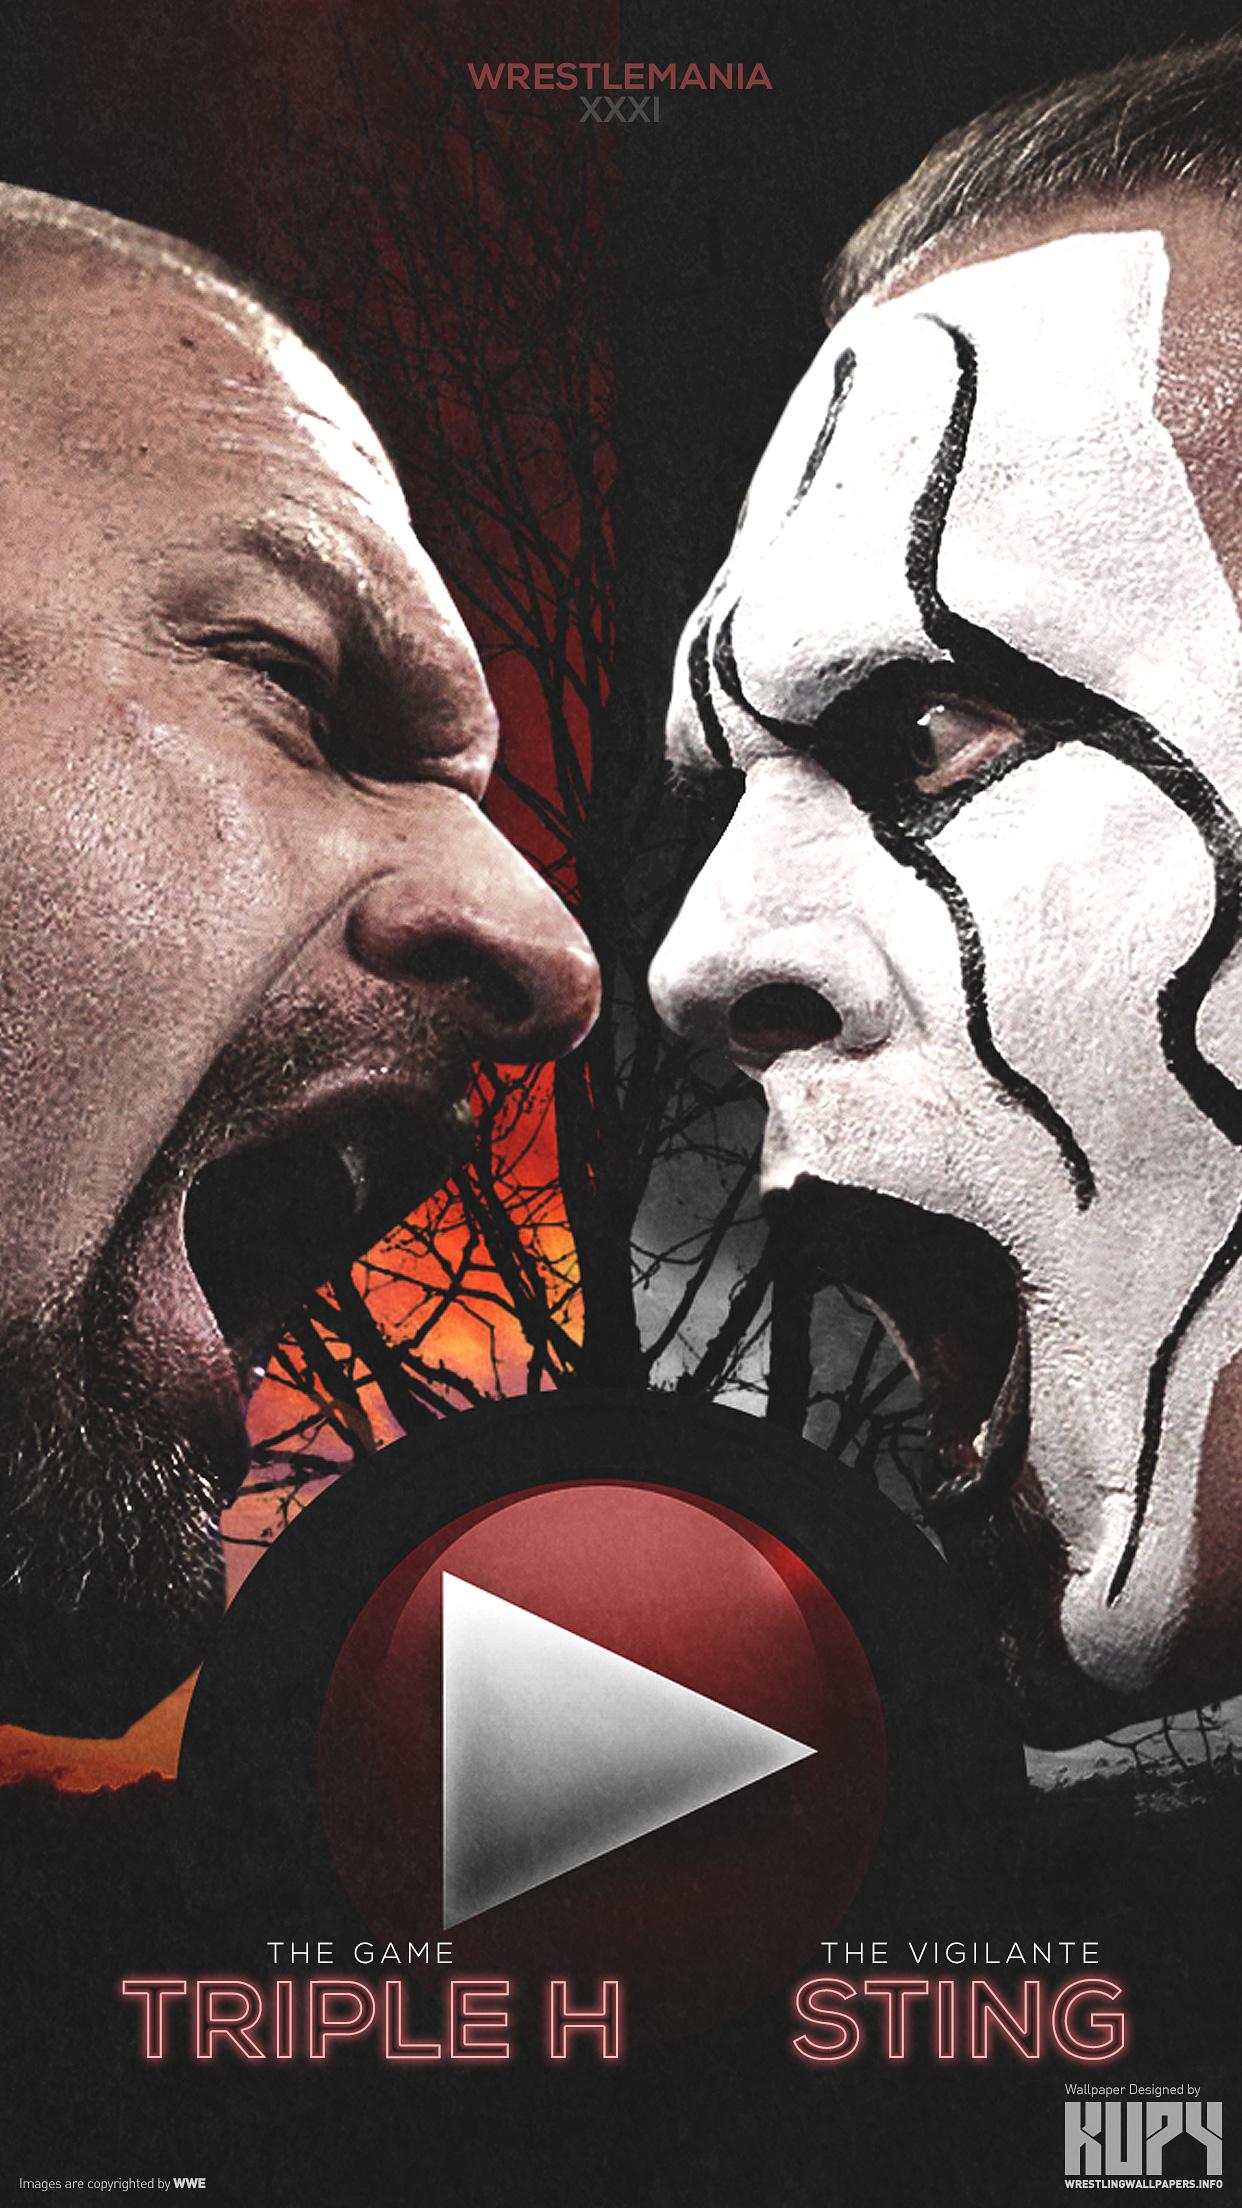 NEW Triple H vs. Sting Road to WrestleMania 31 wallpaper!